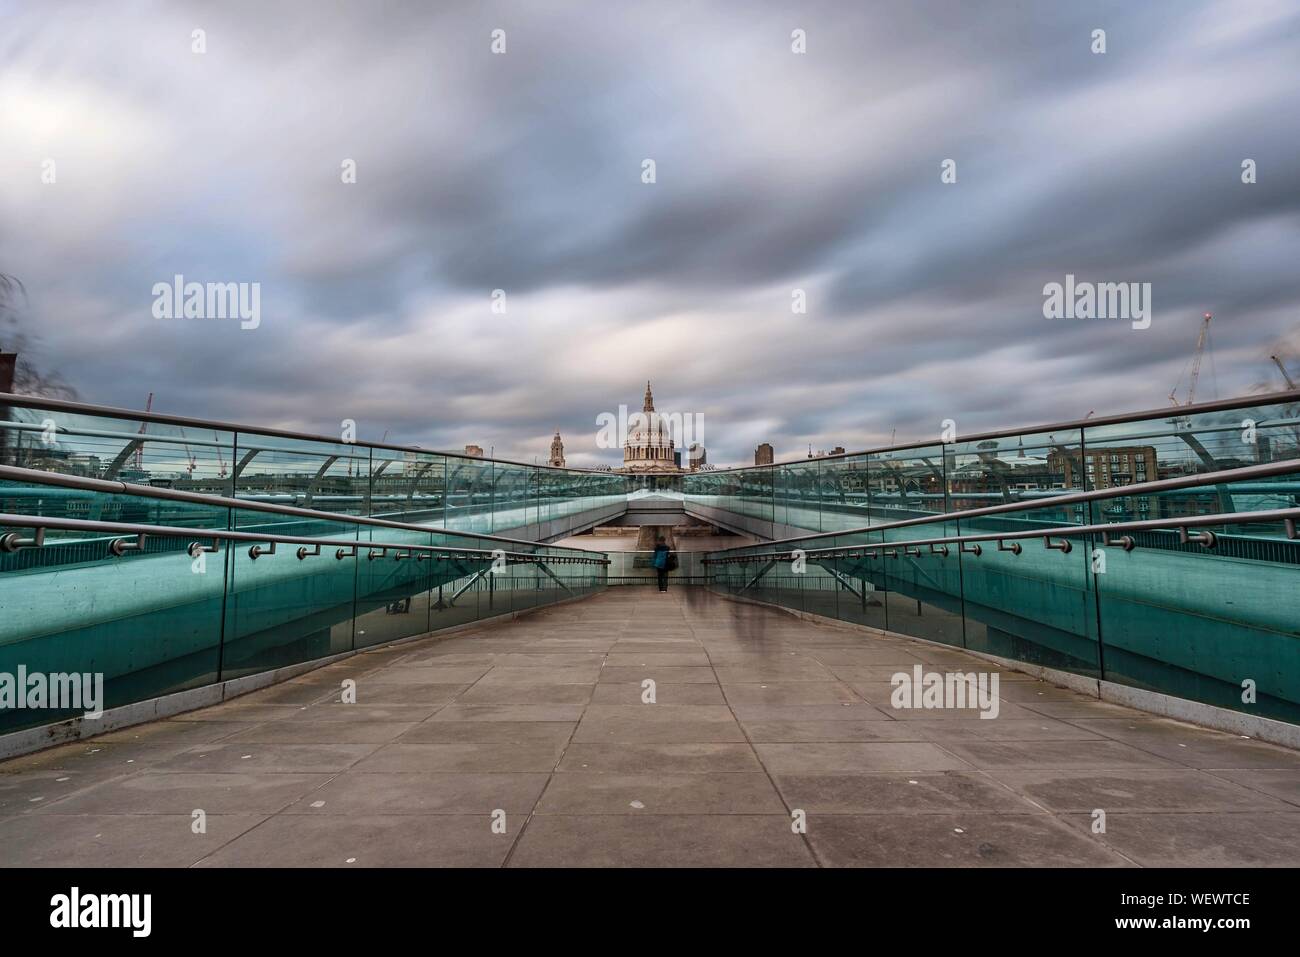 Diminishing View Of London Millennium Footbridge Against Cloudy Sky Stock Photo